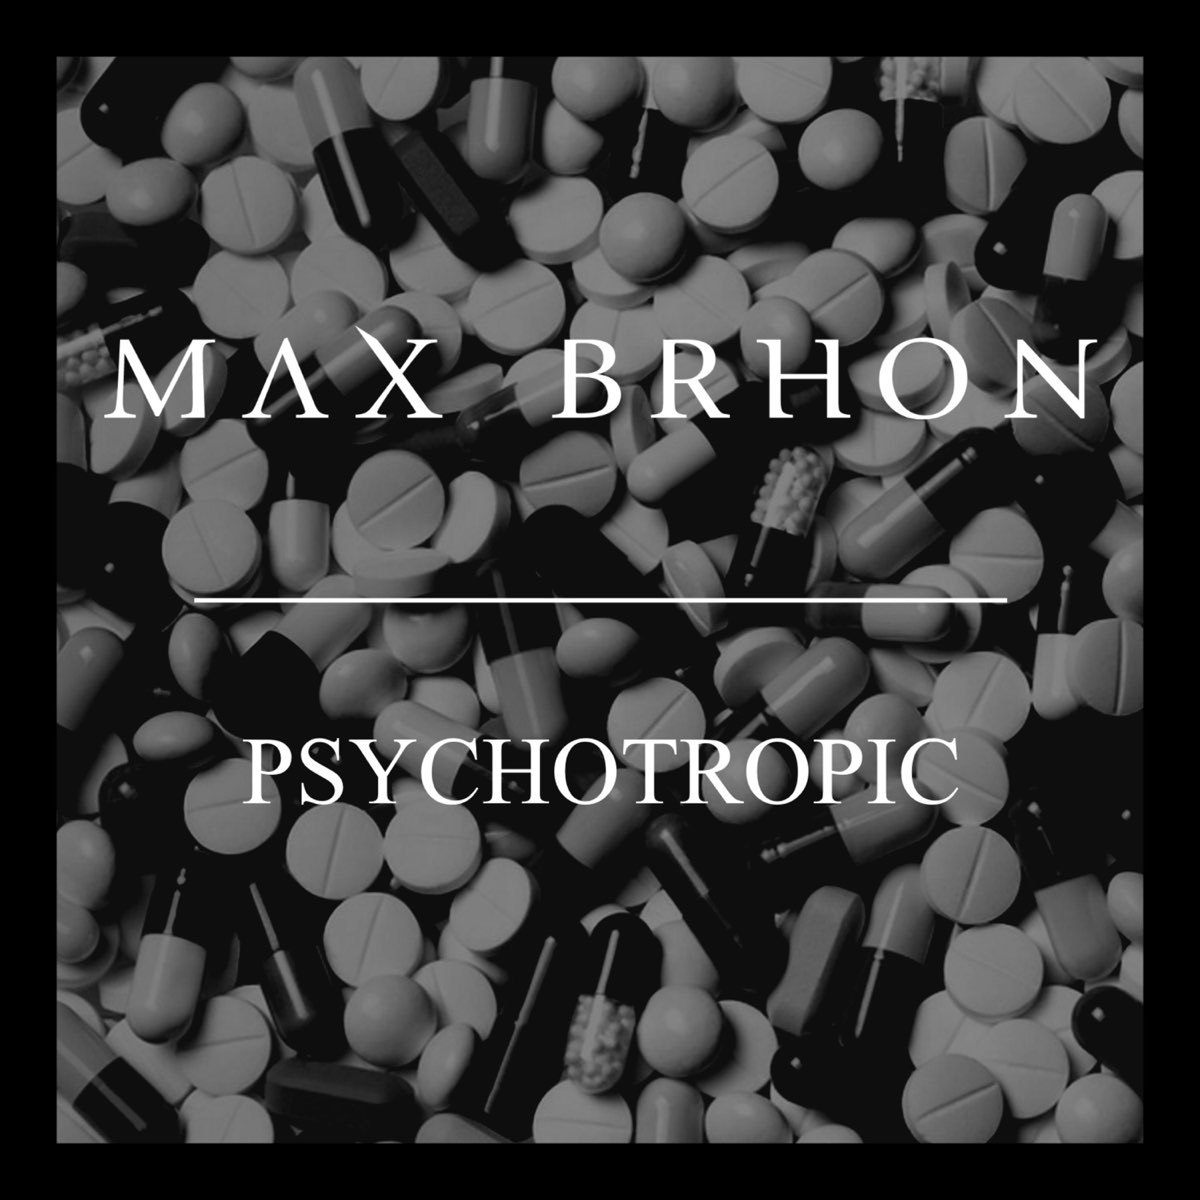 Max brhon cyberpunk музыка фото 72